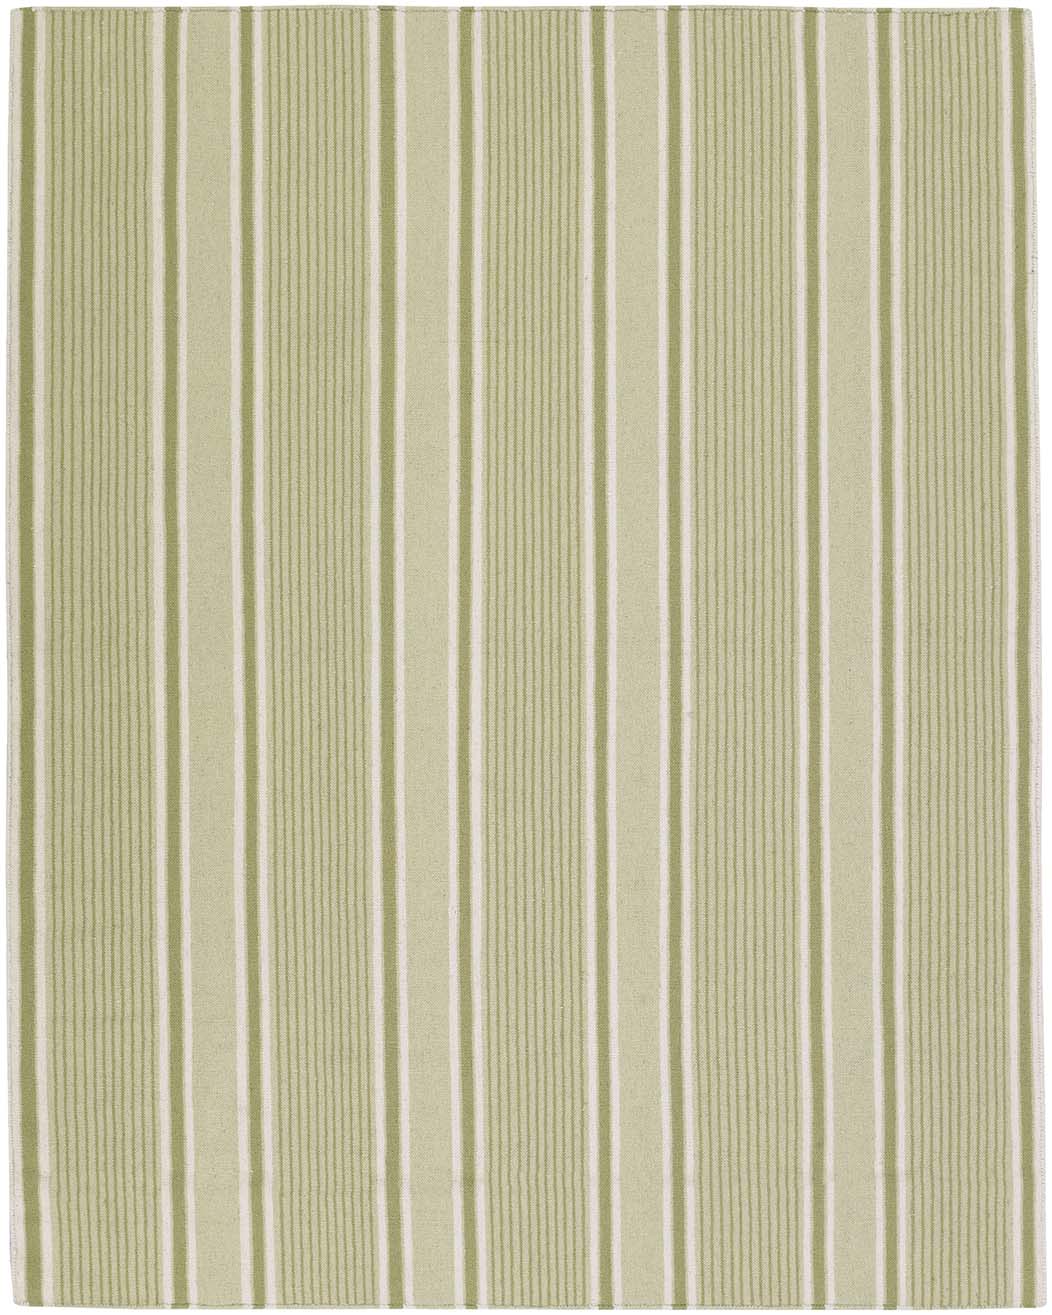 Surya Farmhouse Stripes FAR-7010 Product Image